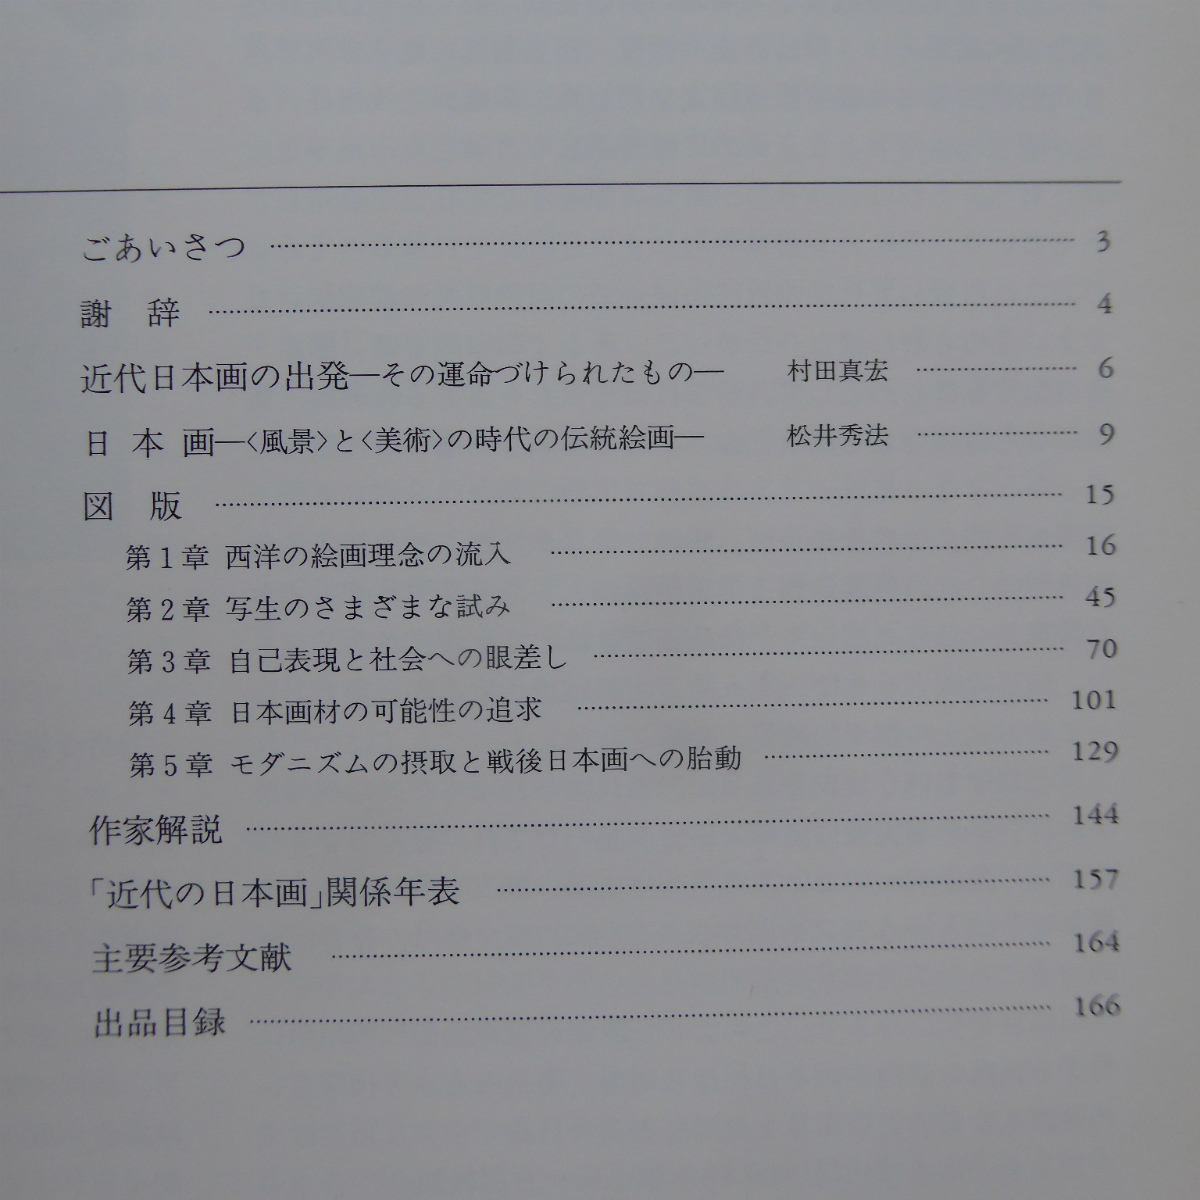 e2図録【近代の日本画-西洋との出会いと対話/愛知県美術館・1993年】写生のさまざまな試み/日本画材の可能性の追求_画像4